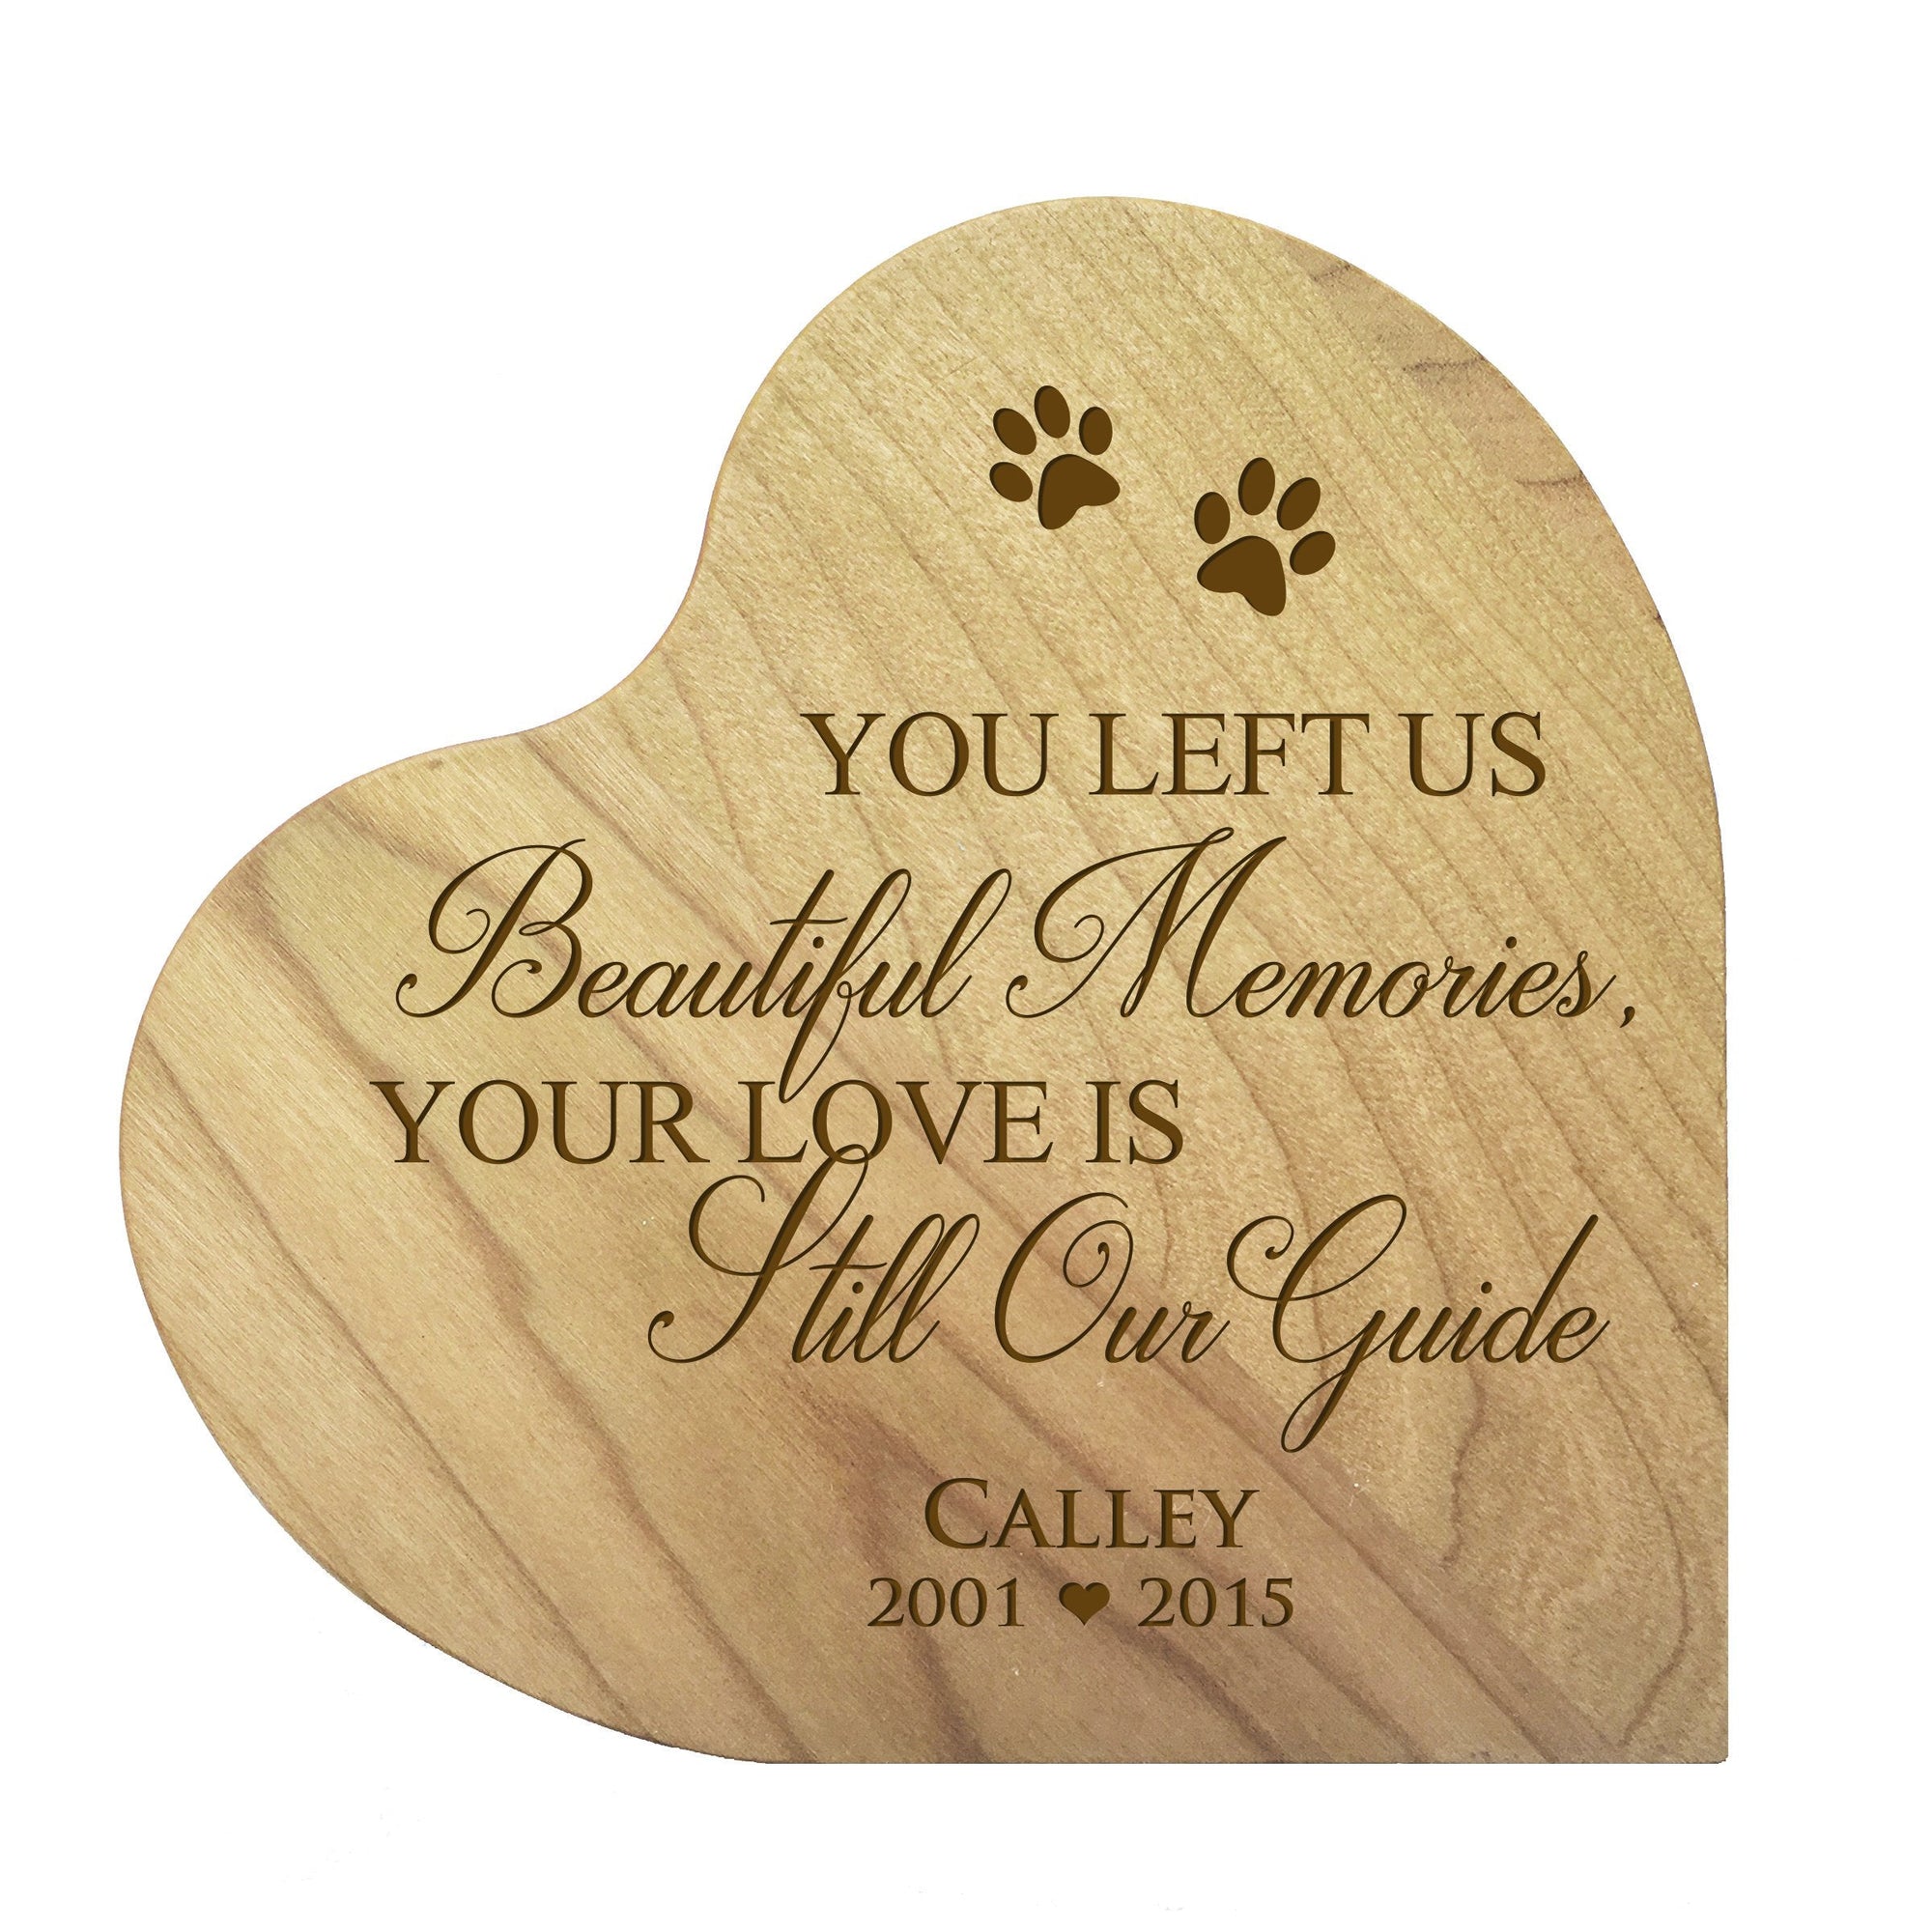 Maple Pet Memorial Heart Block Decor with phrase "You Left Us"